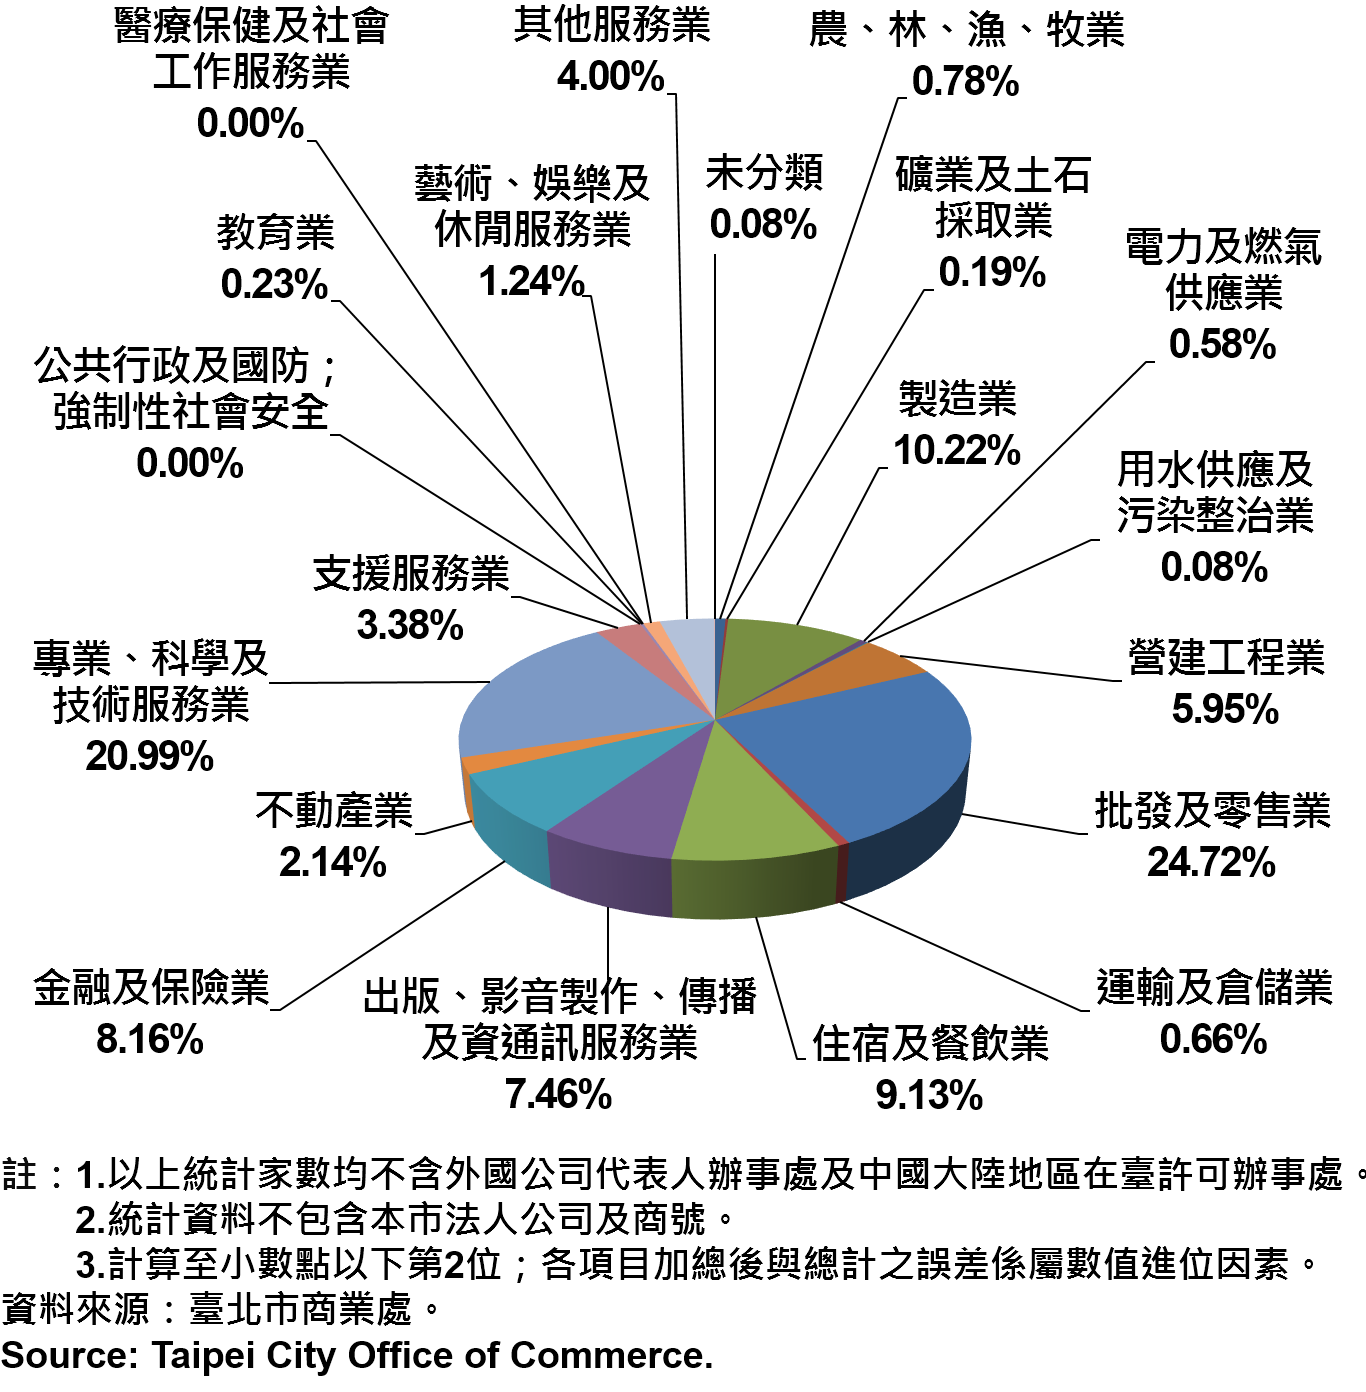 臺北市新創公司行號之業別分布情形—依新增家數—2018Q1 Newly Registered Companies in Taipei City by Industry- Number of Incorporation—2018Q1